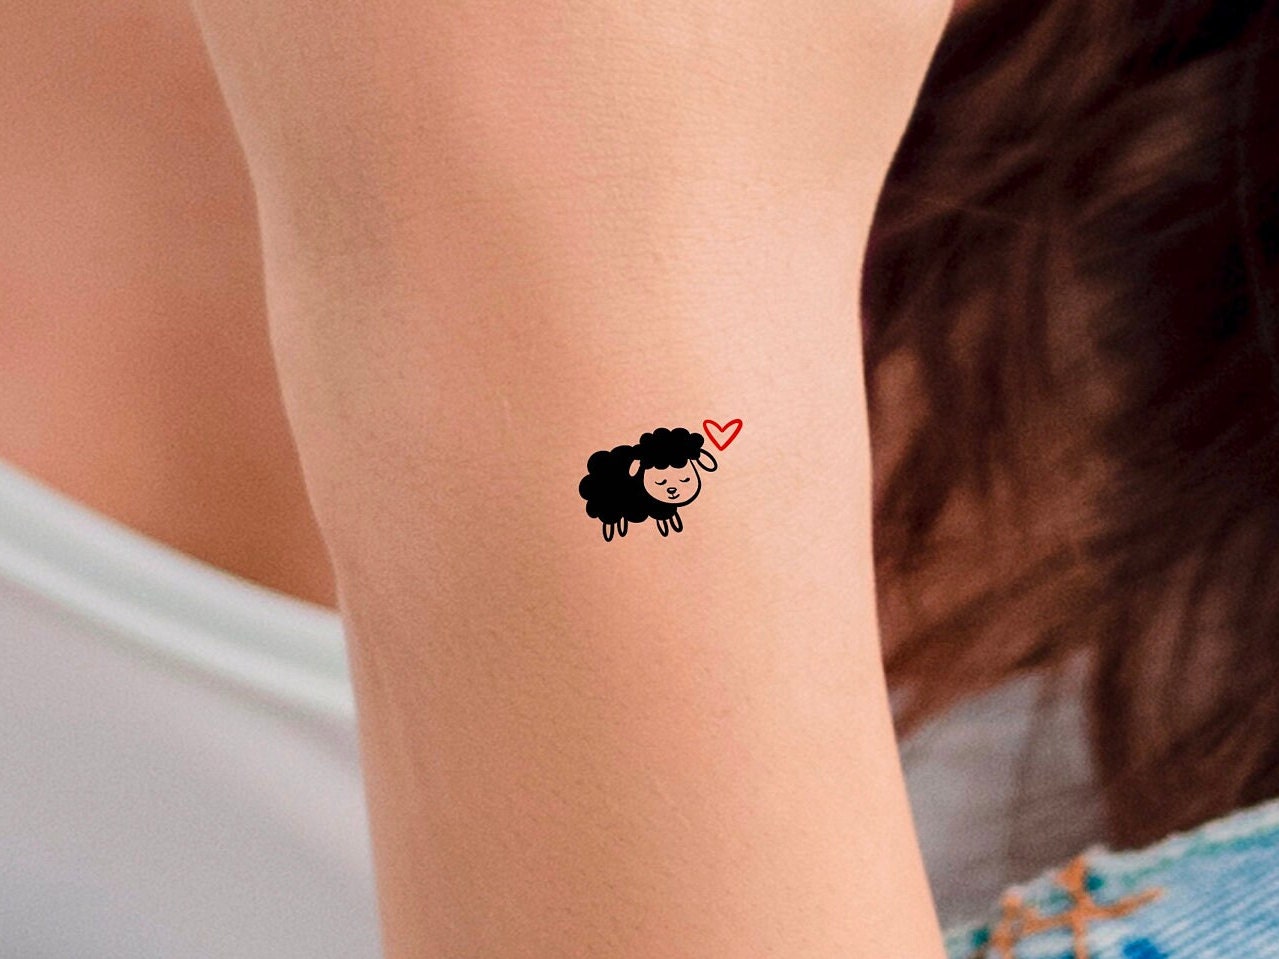 Buy Black Sheep Heart Temporary Tattoo Online in India - Etsy